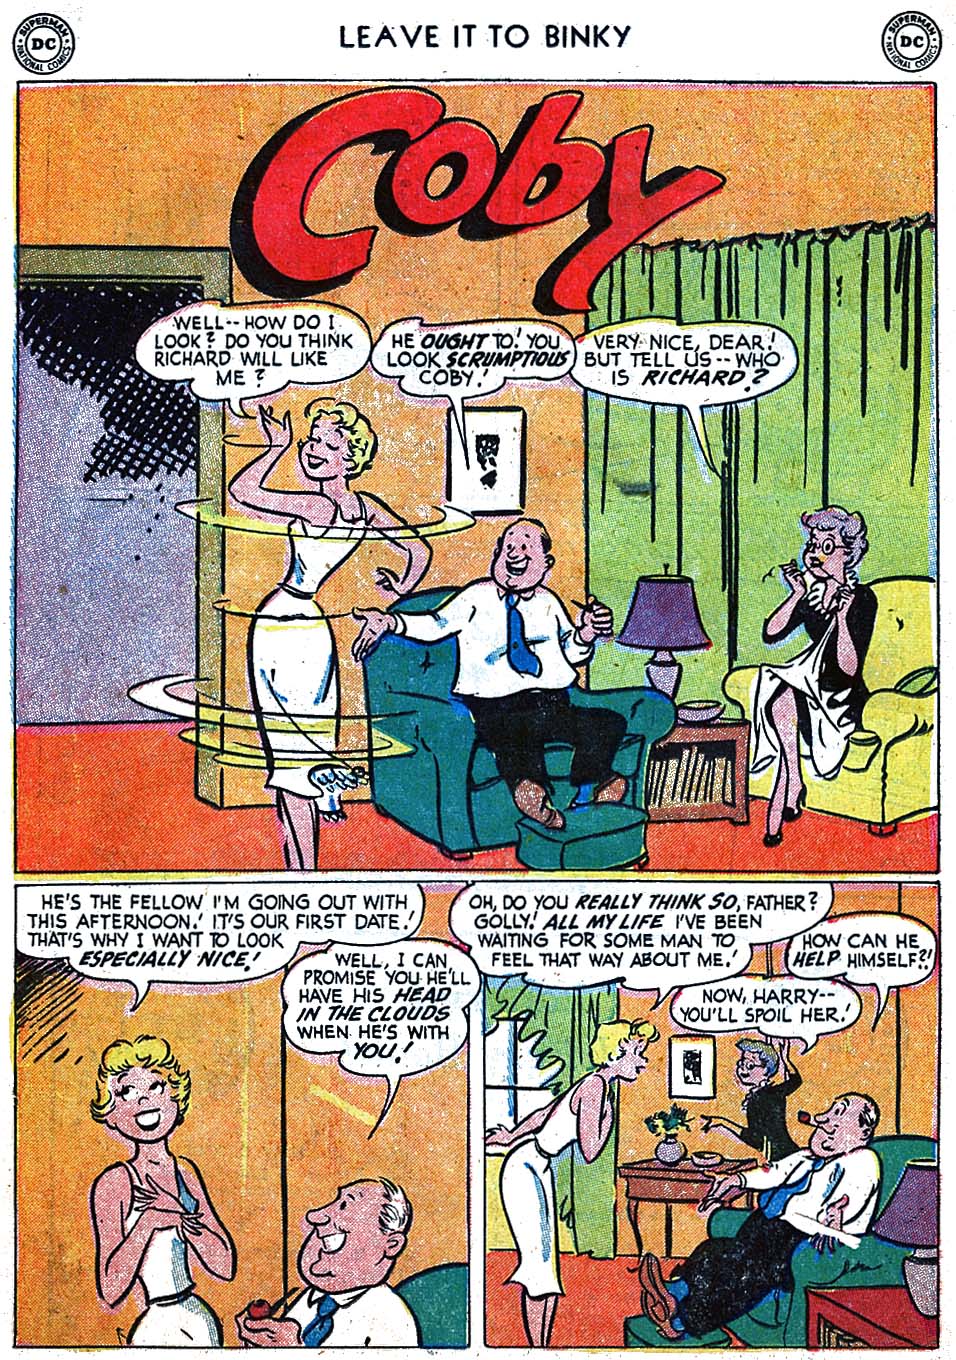 Read online Leave it to Binky comic -  Issue #43 - 14